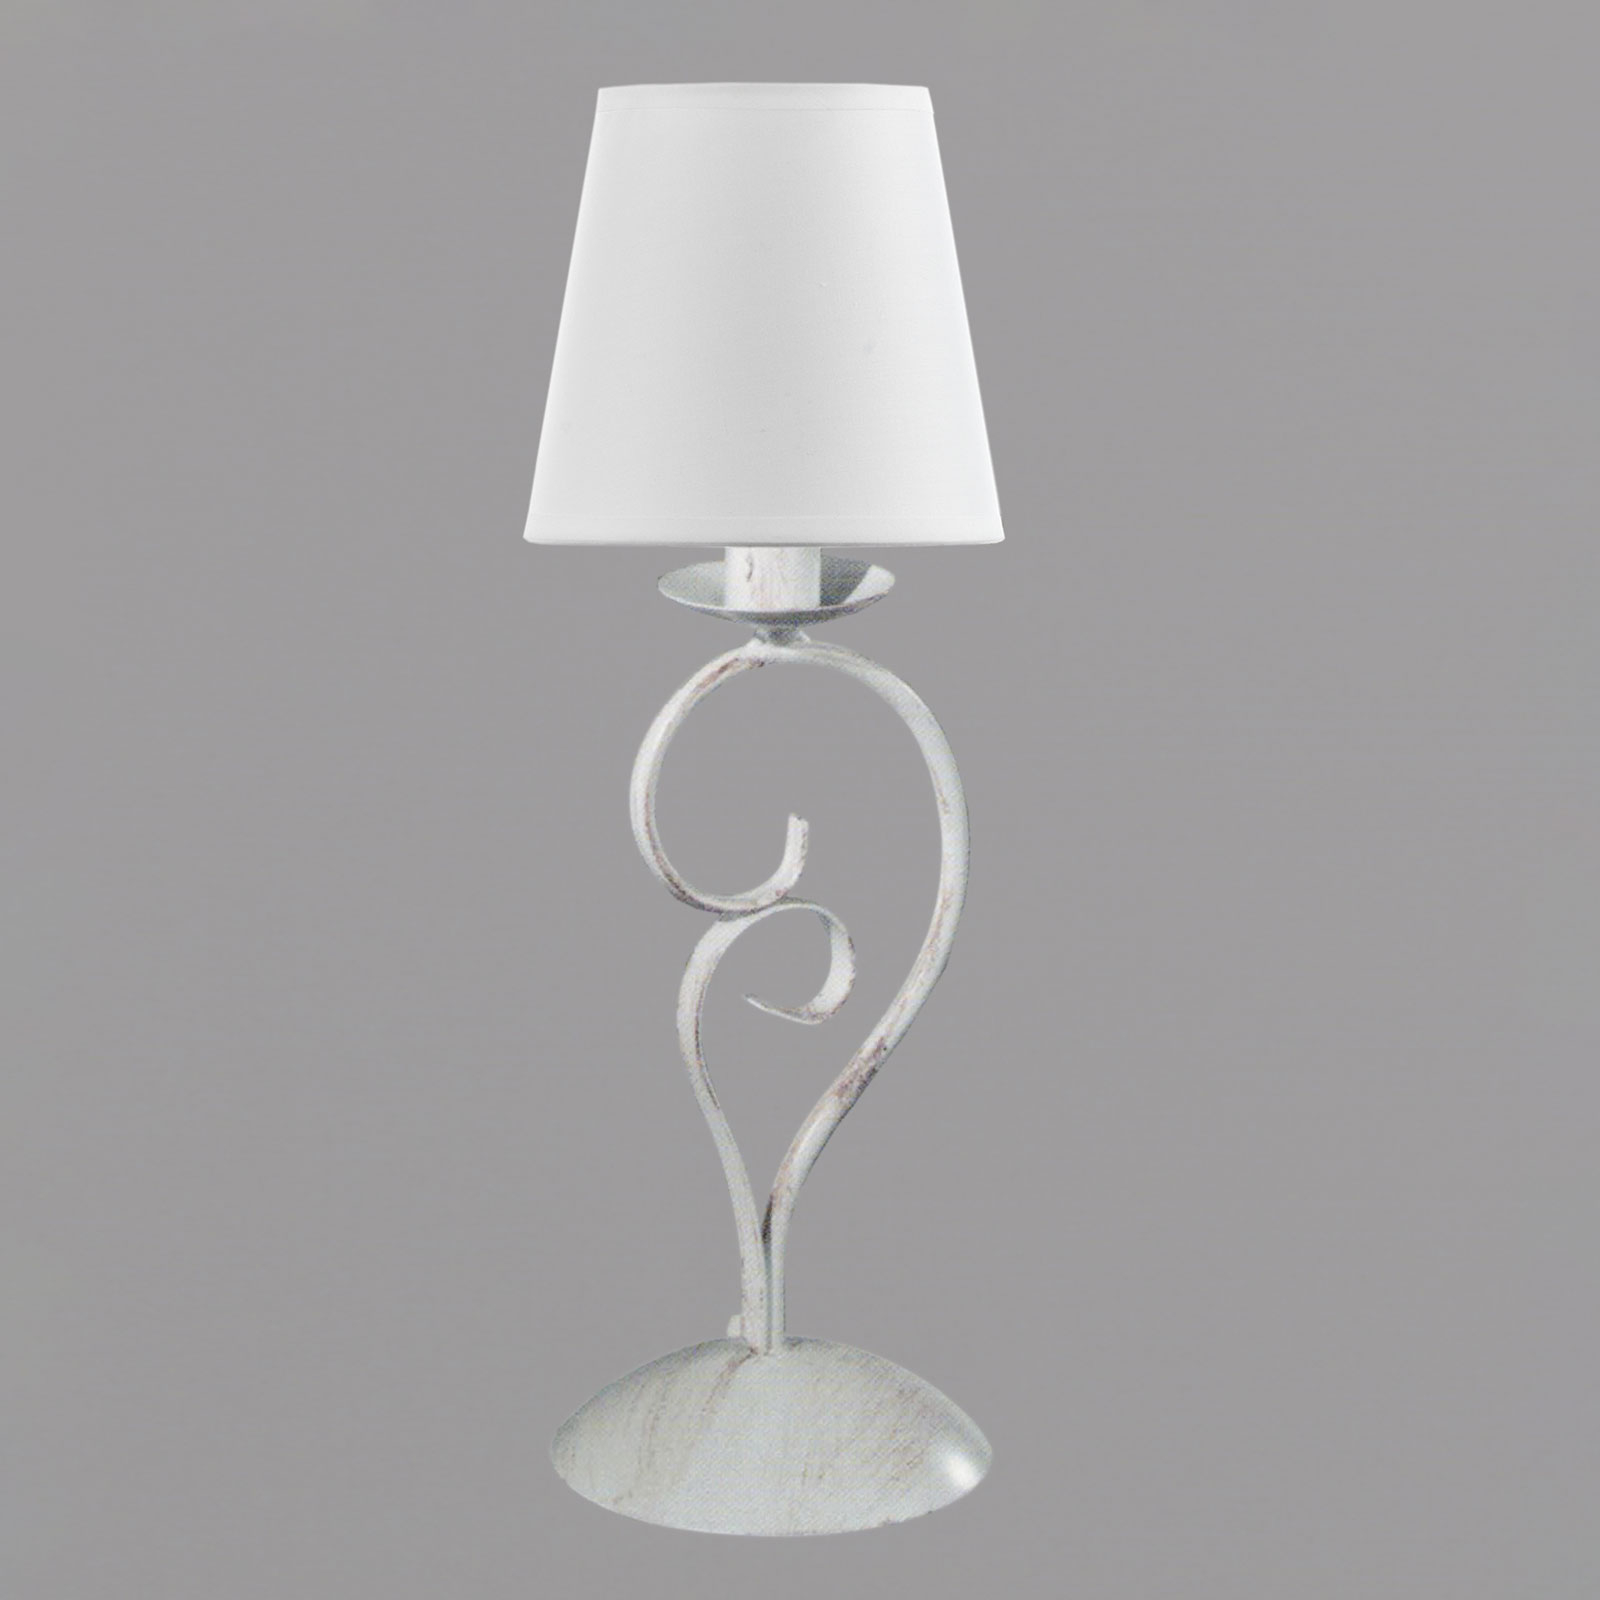 Pompei table lamp 50 cm white fabric lampshade